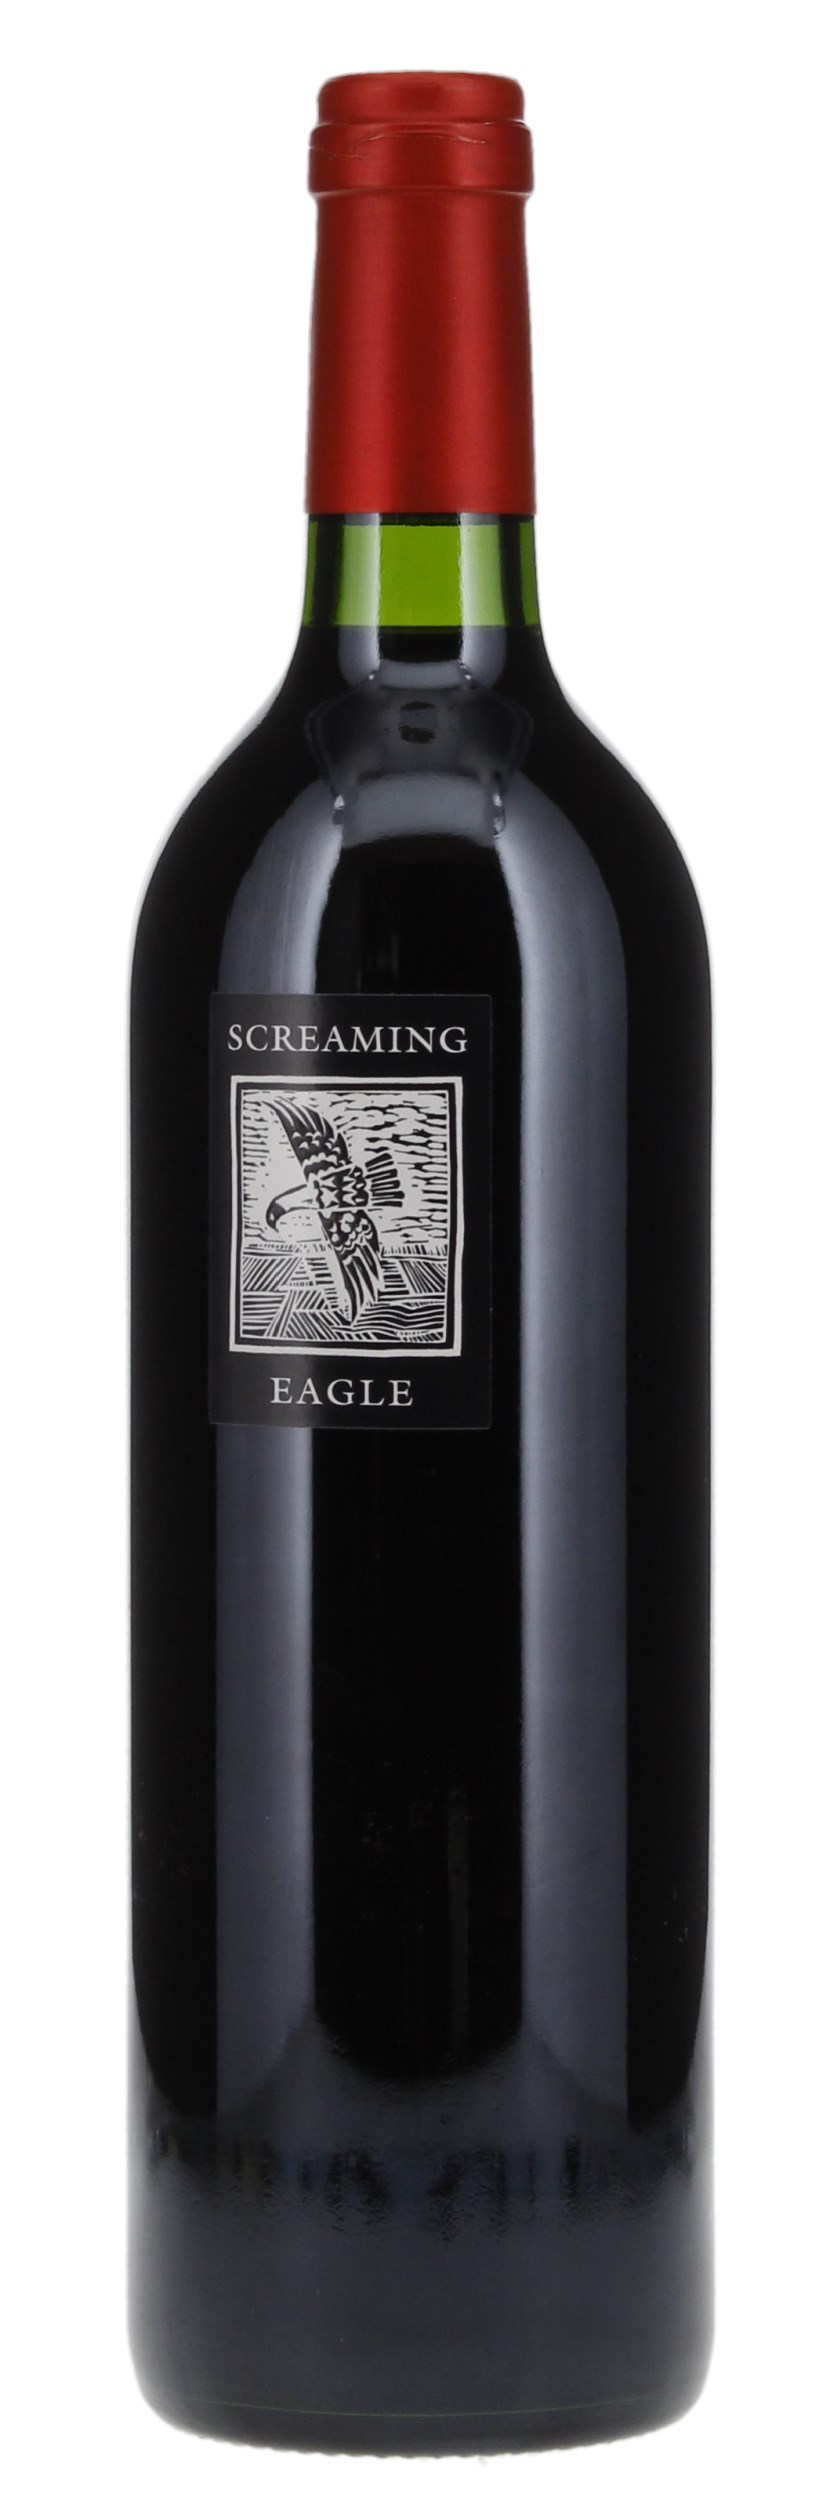 2003 Screaming Eagle Cabernet Sauvignon, 750ml